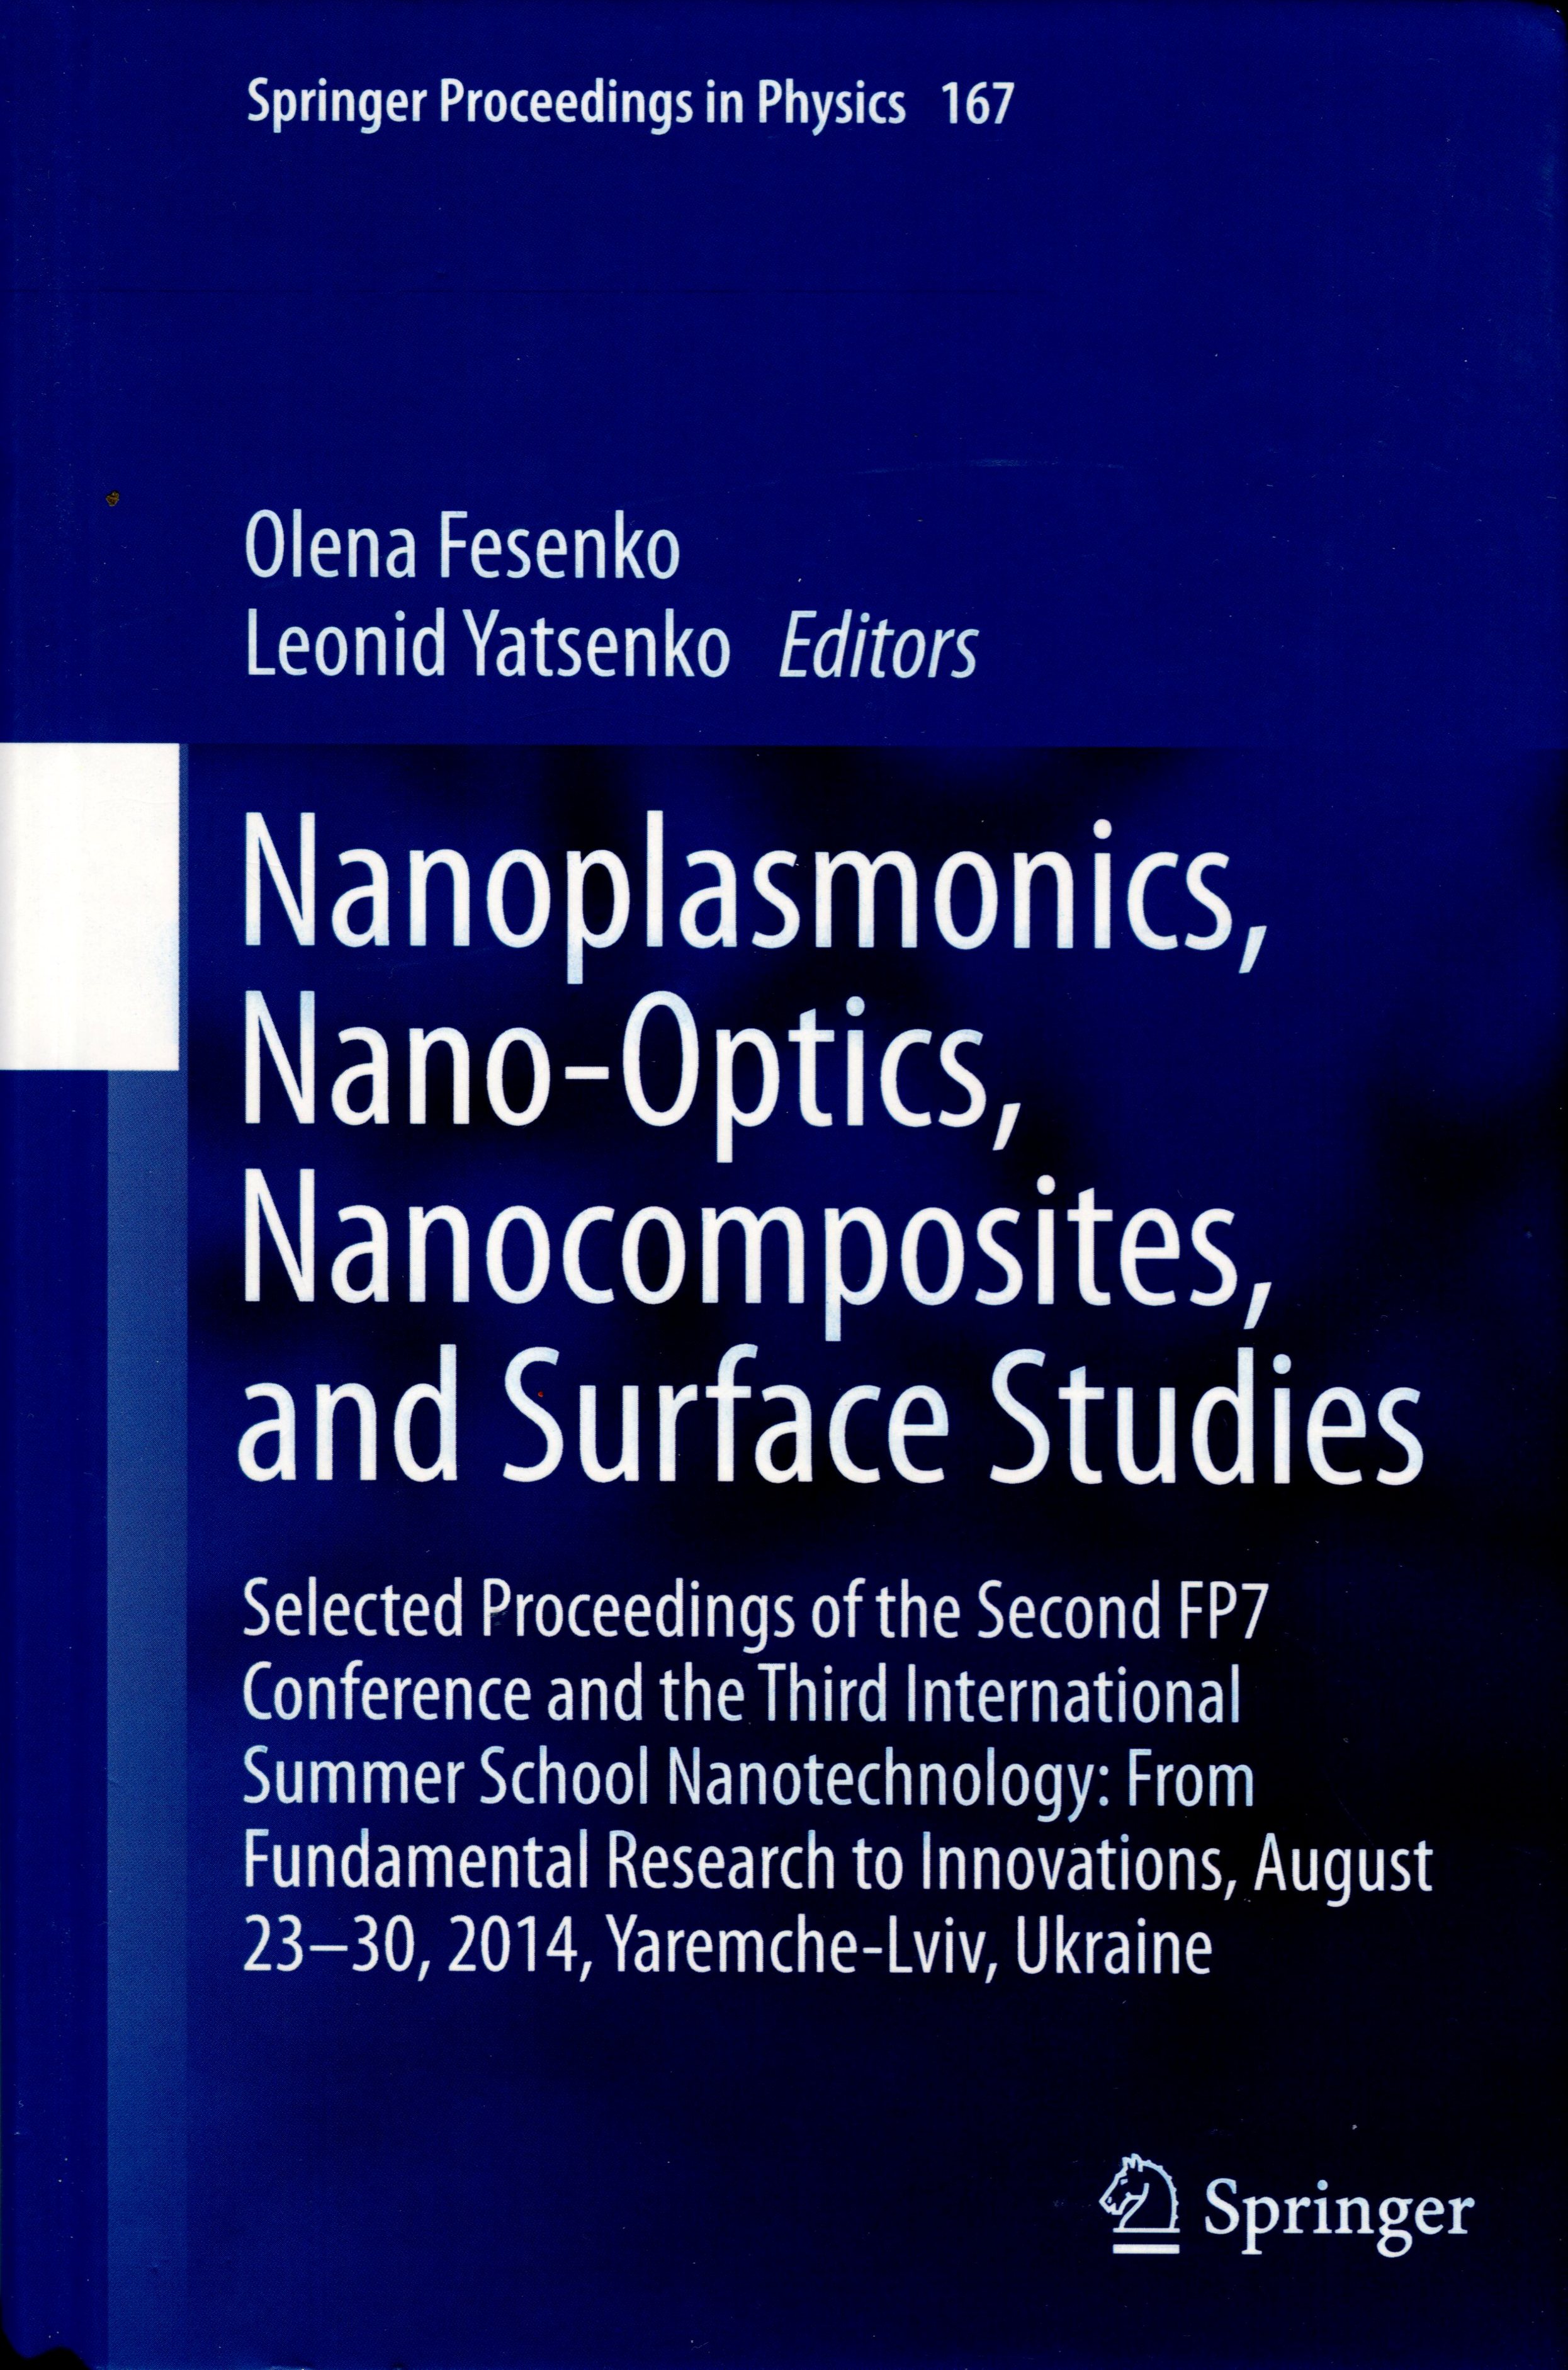 Nanoplasmonics, Nano-Optics, Nanocomposites, and Surface Studies